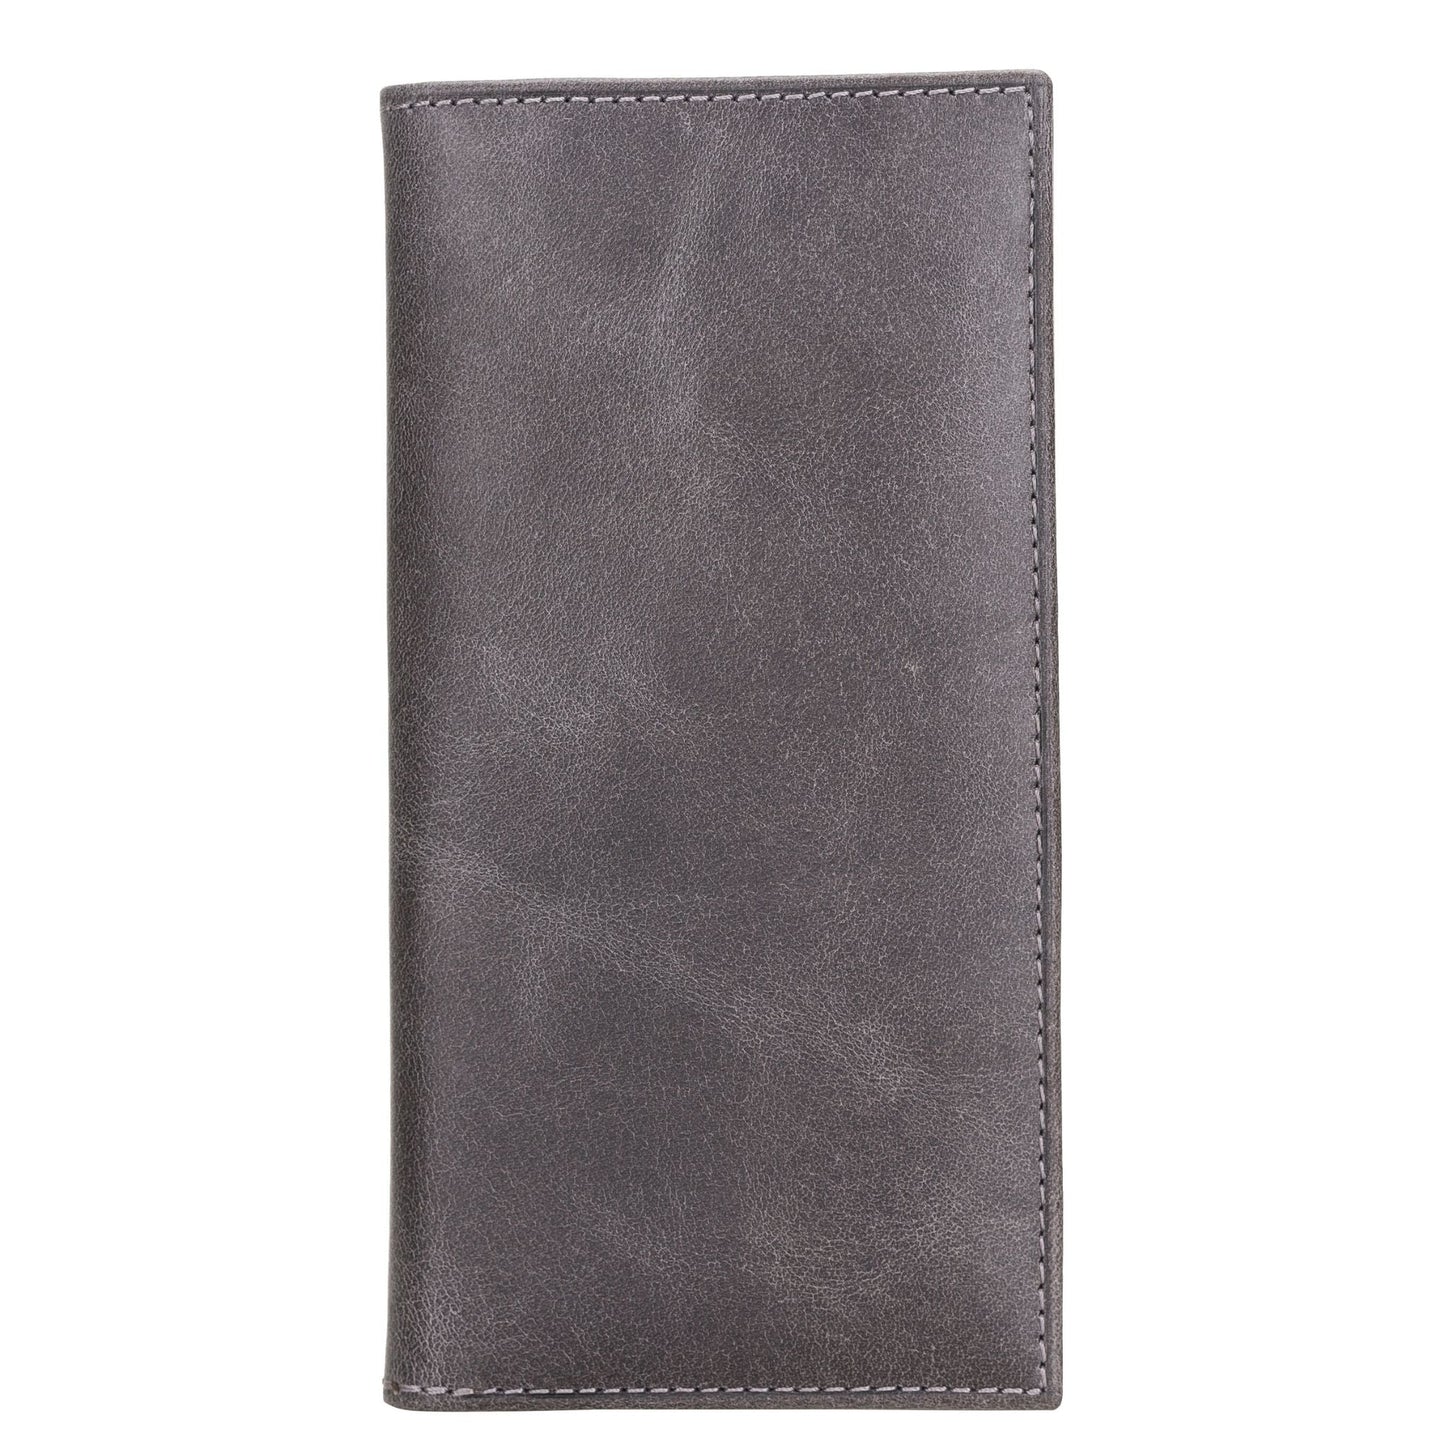 Ouray Handmade Full-Grain Leather Long Wallet for Men and Women